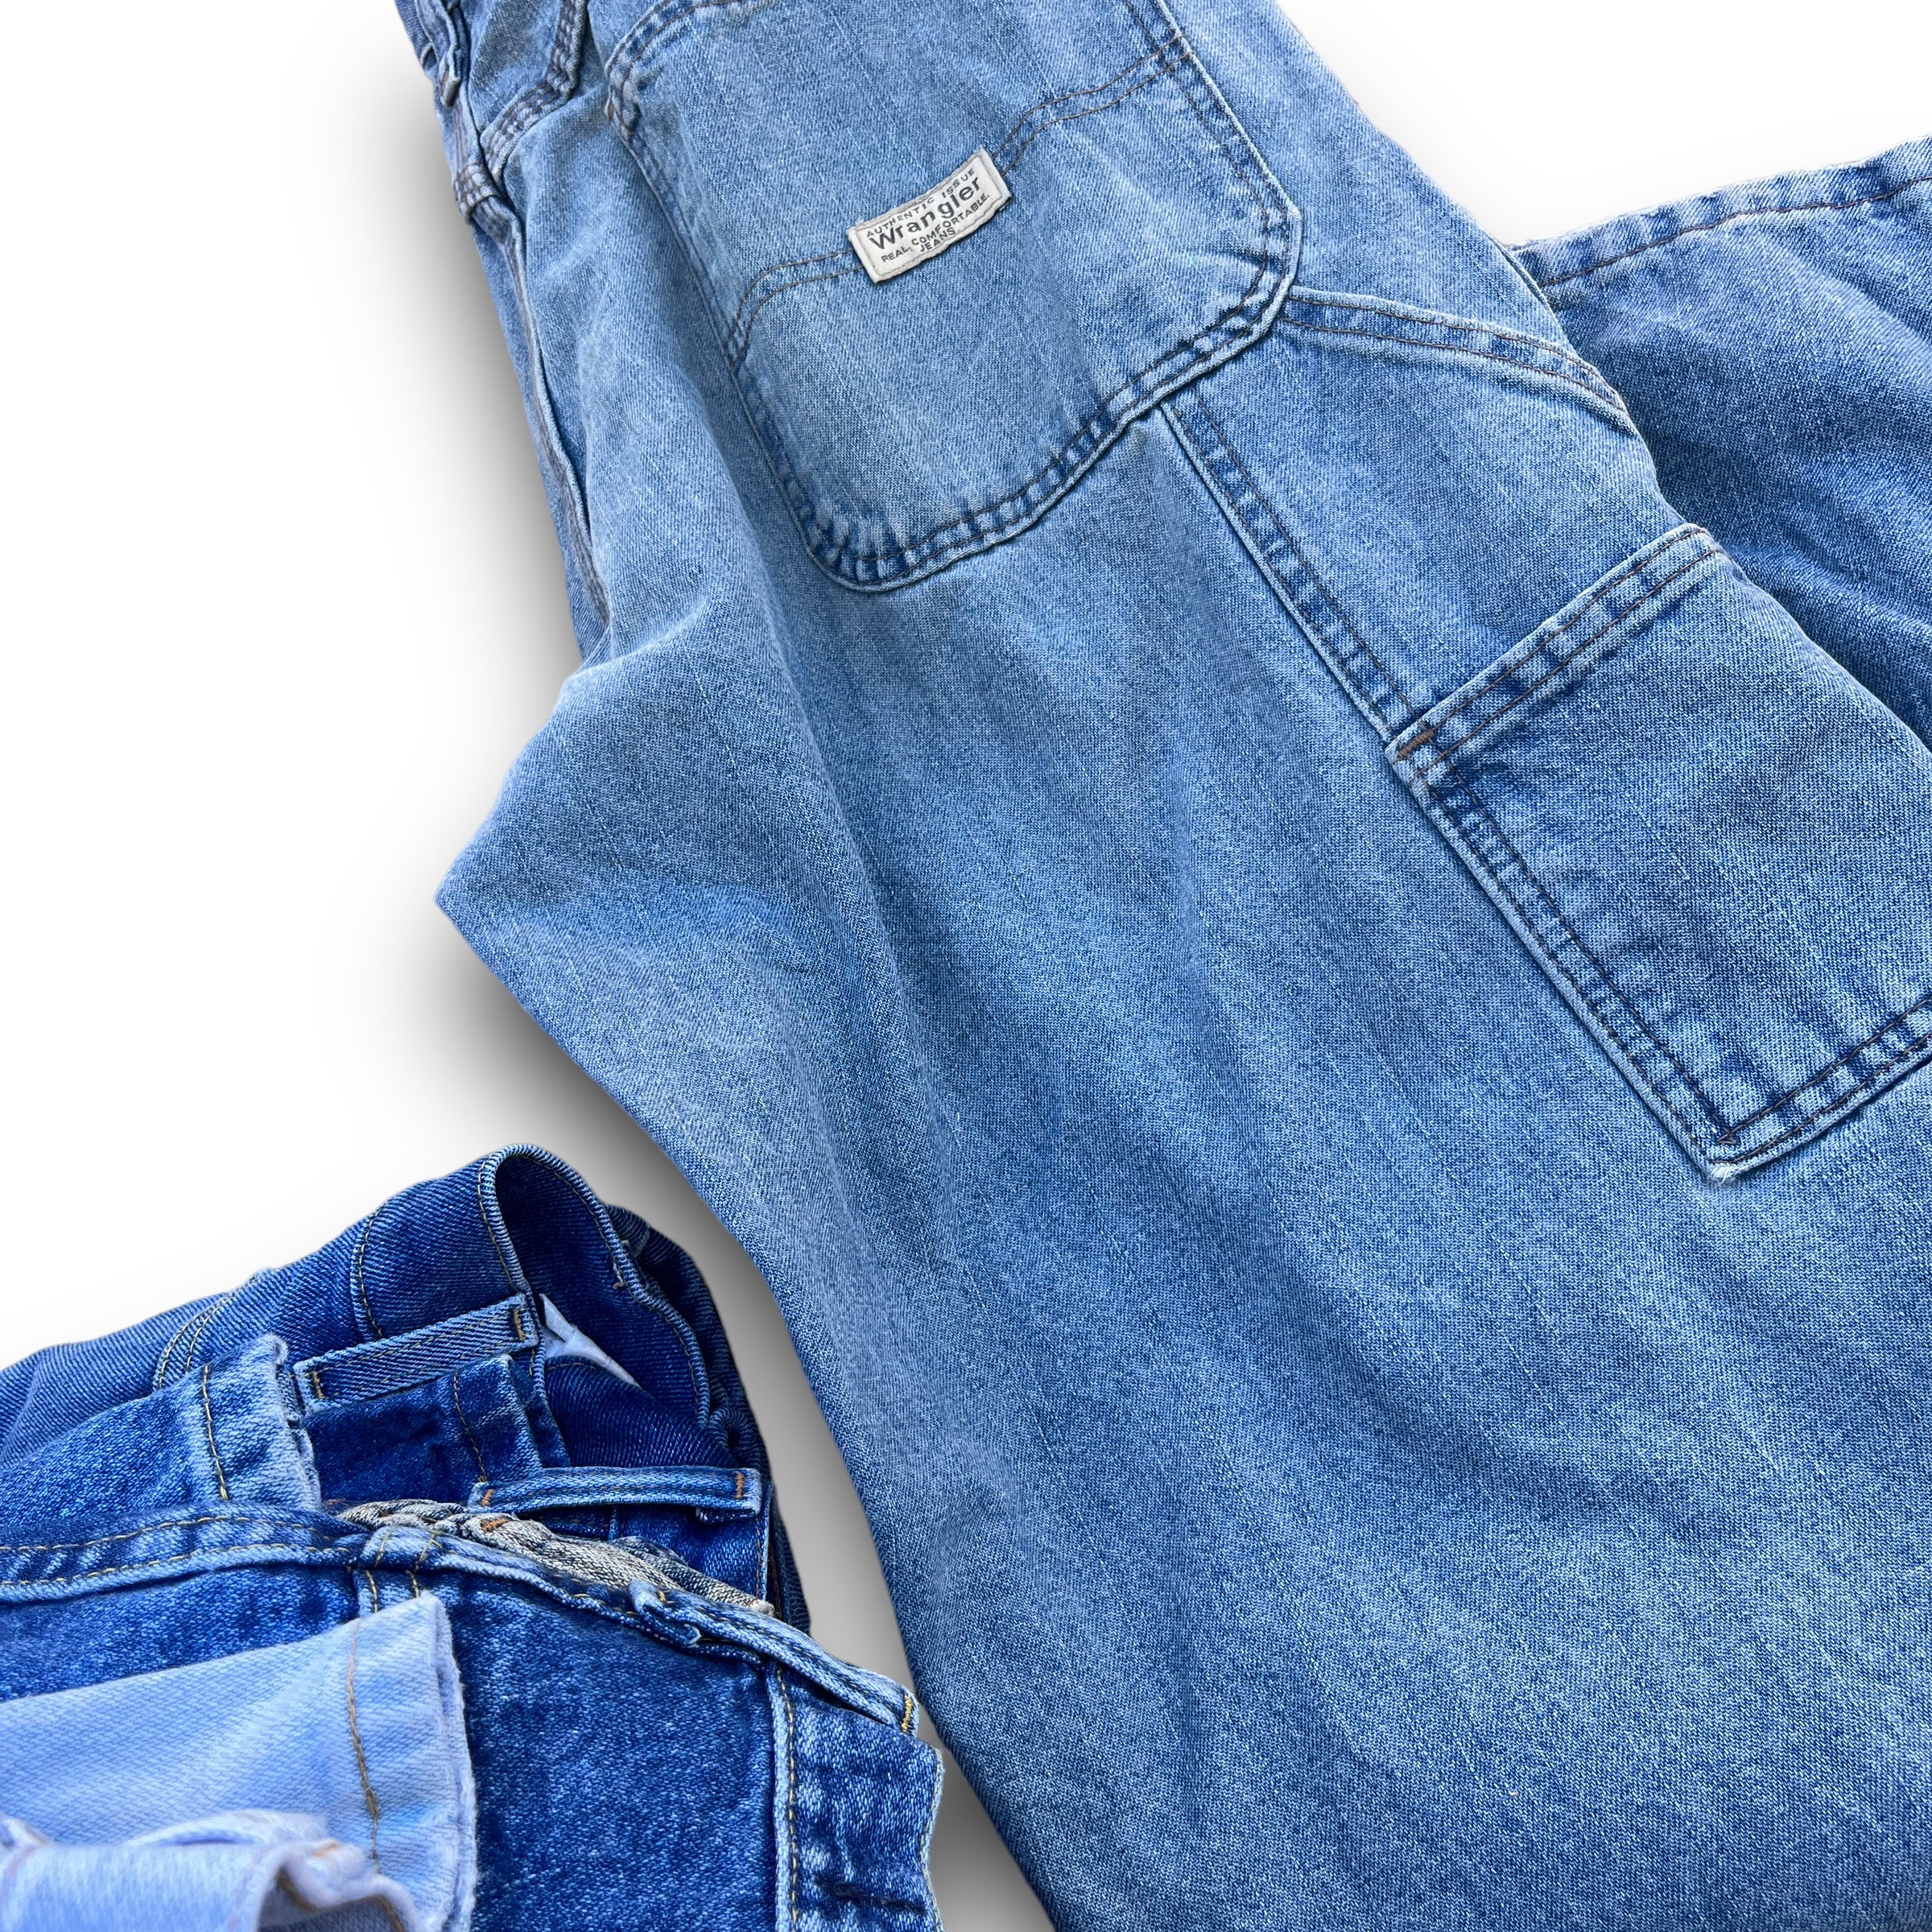 Lee Wrangler Denim Jeans Mix 10-50 Pieces